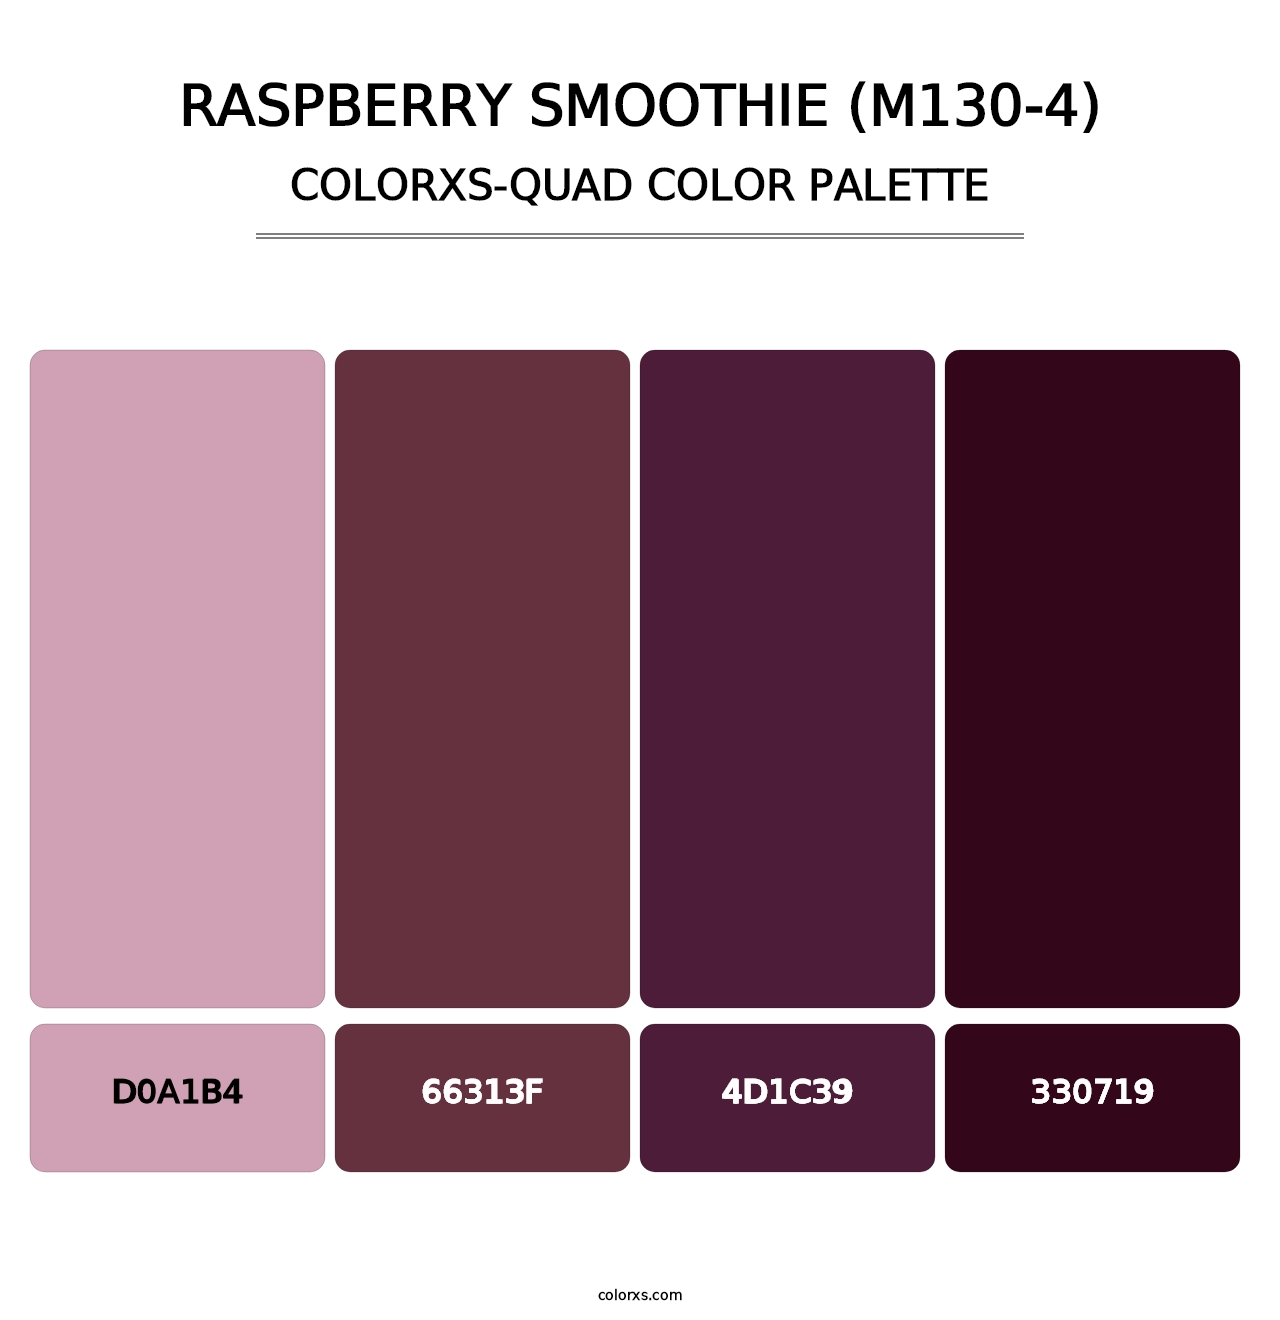 Raspberry Smoothie (M130-4) - Colorxs Quad Palette